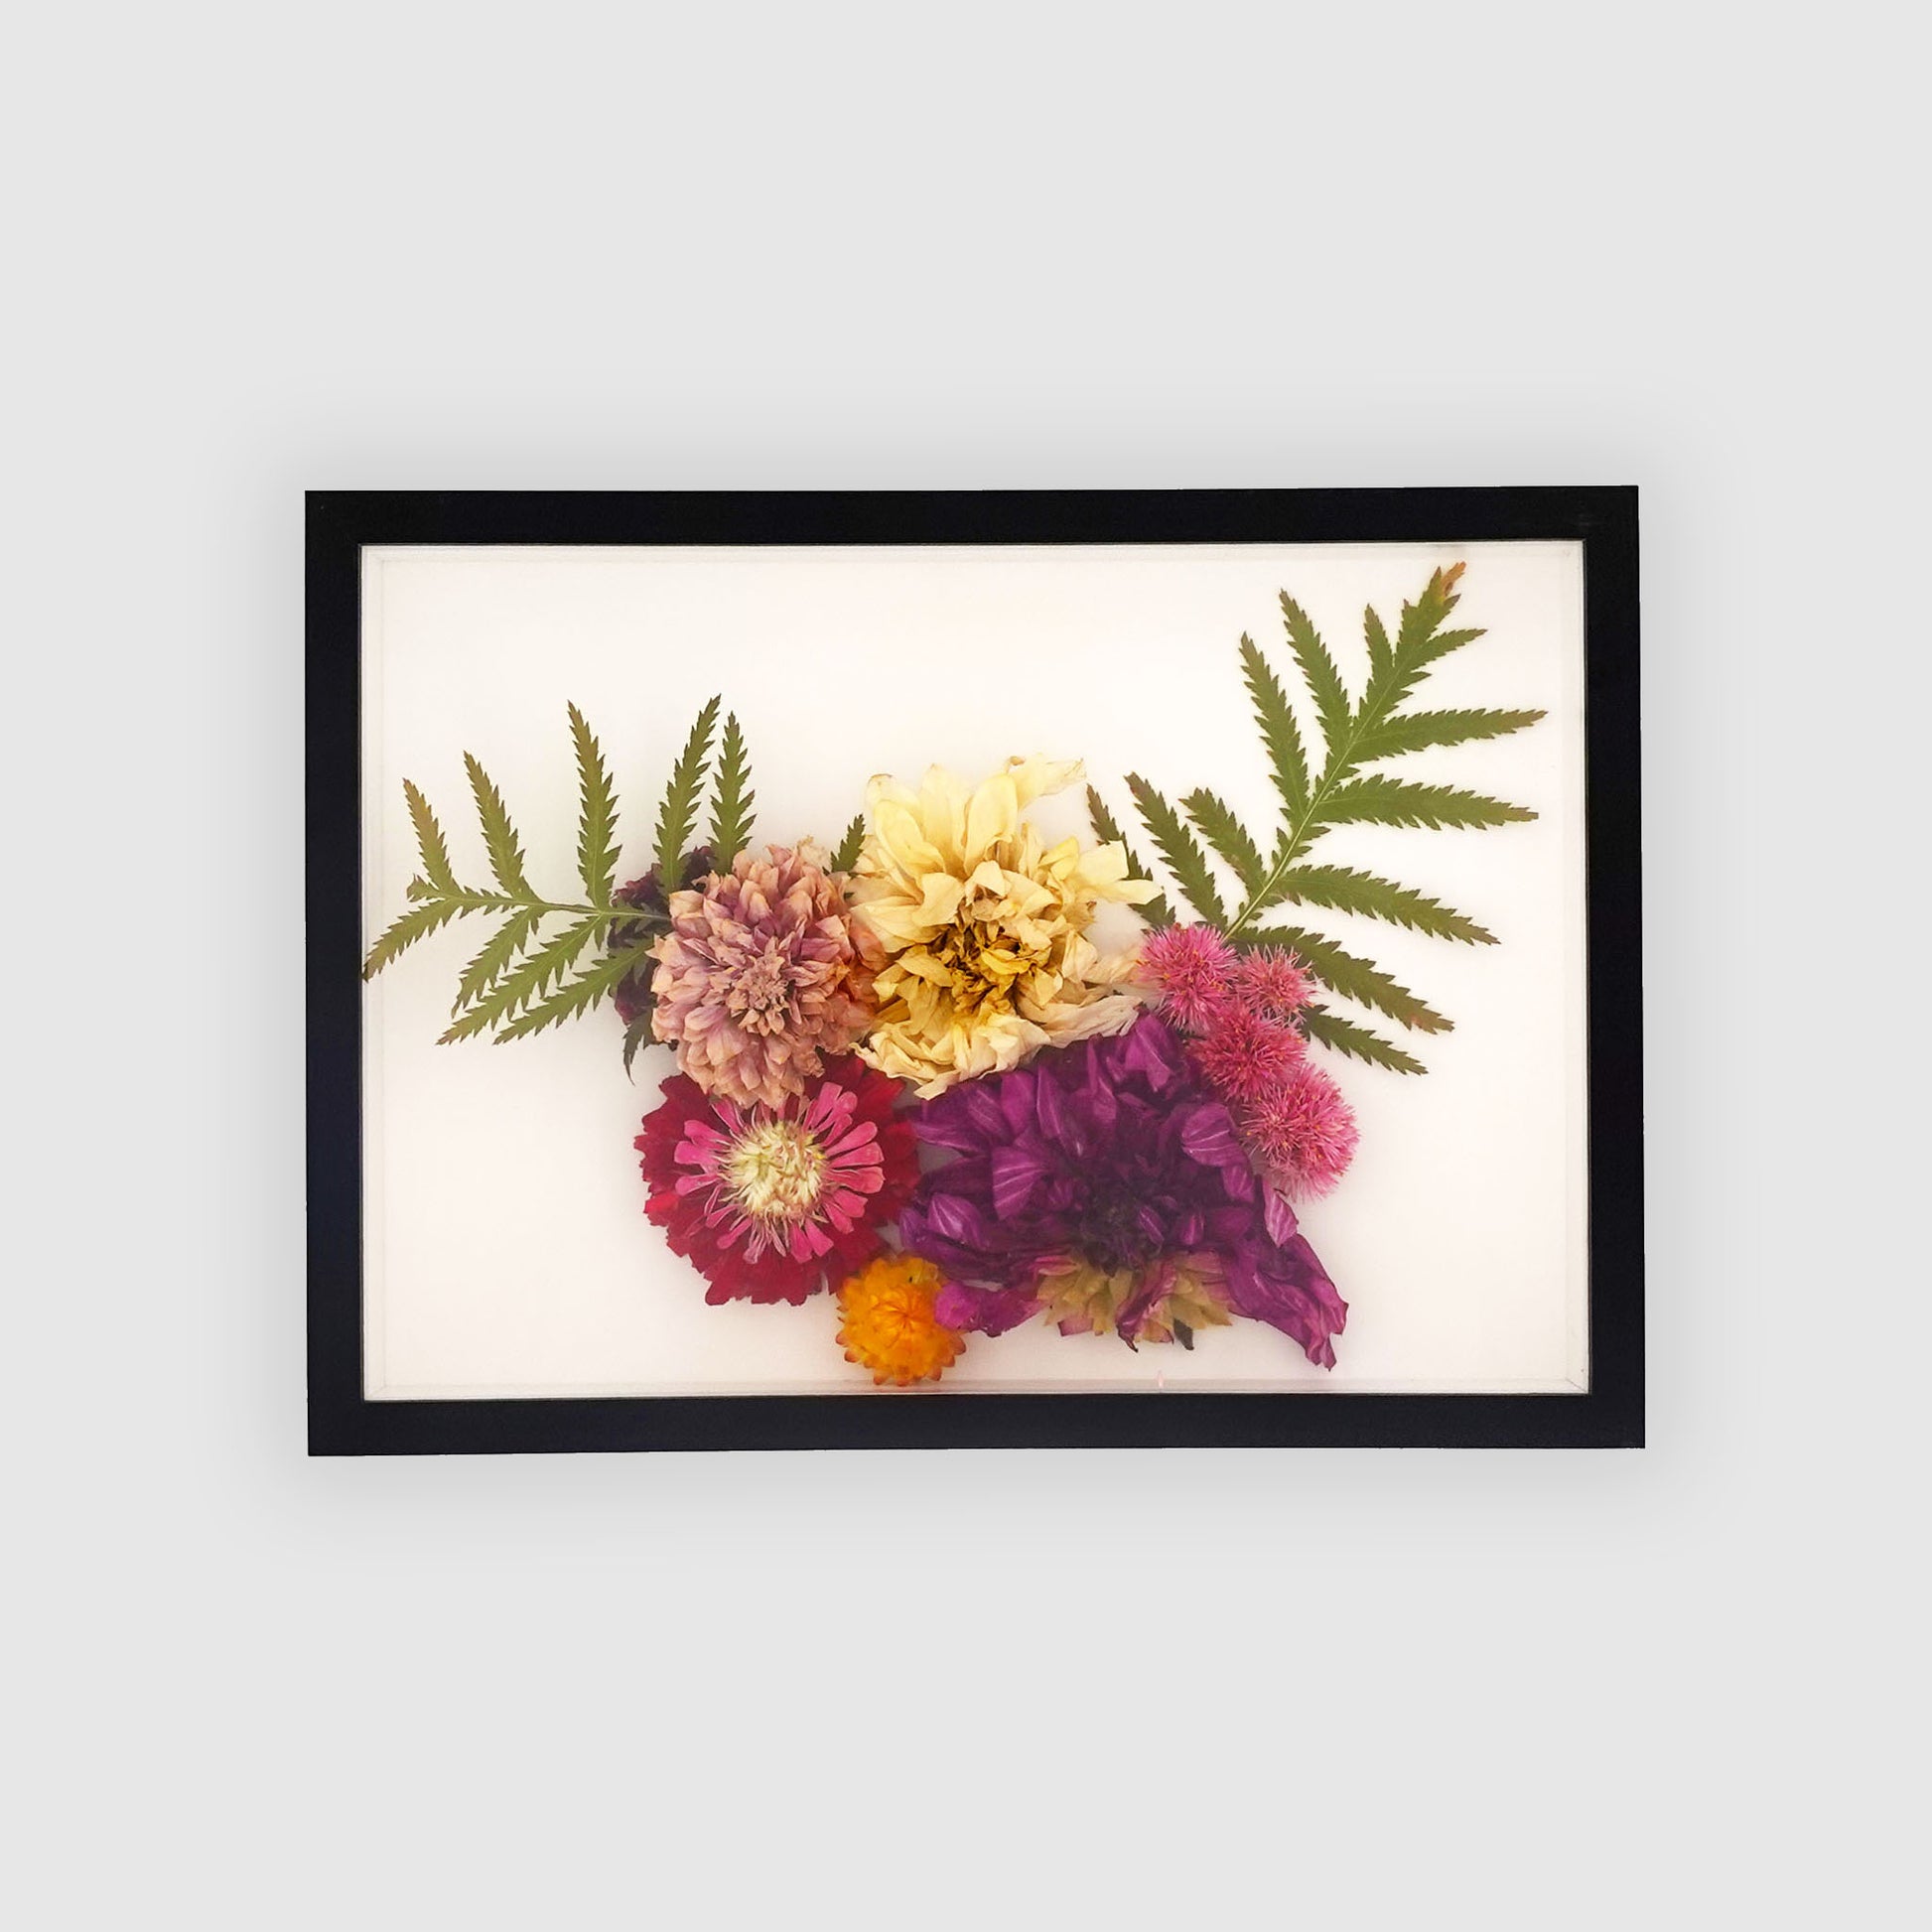 Dried Flower Bouquet Frame 001